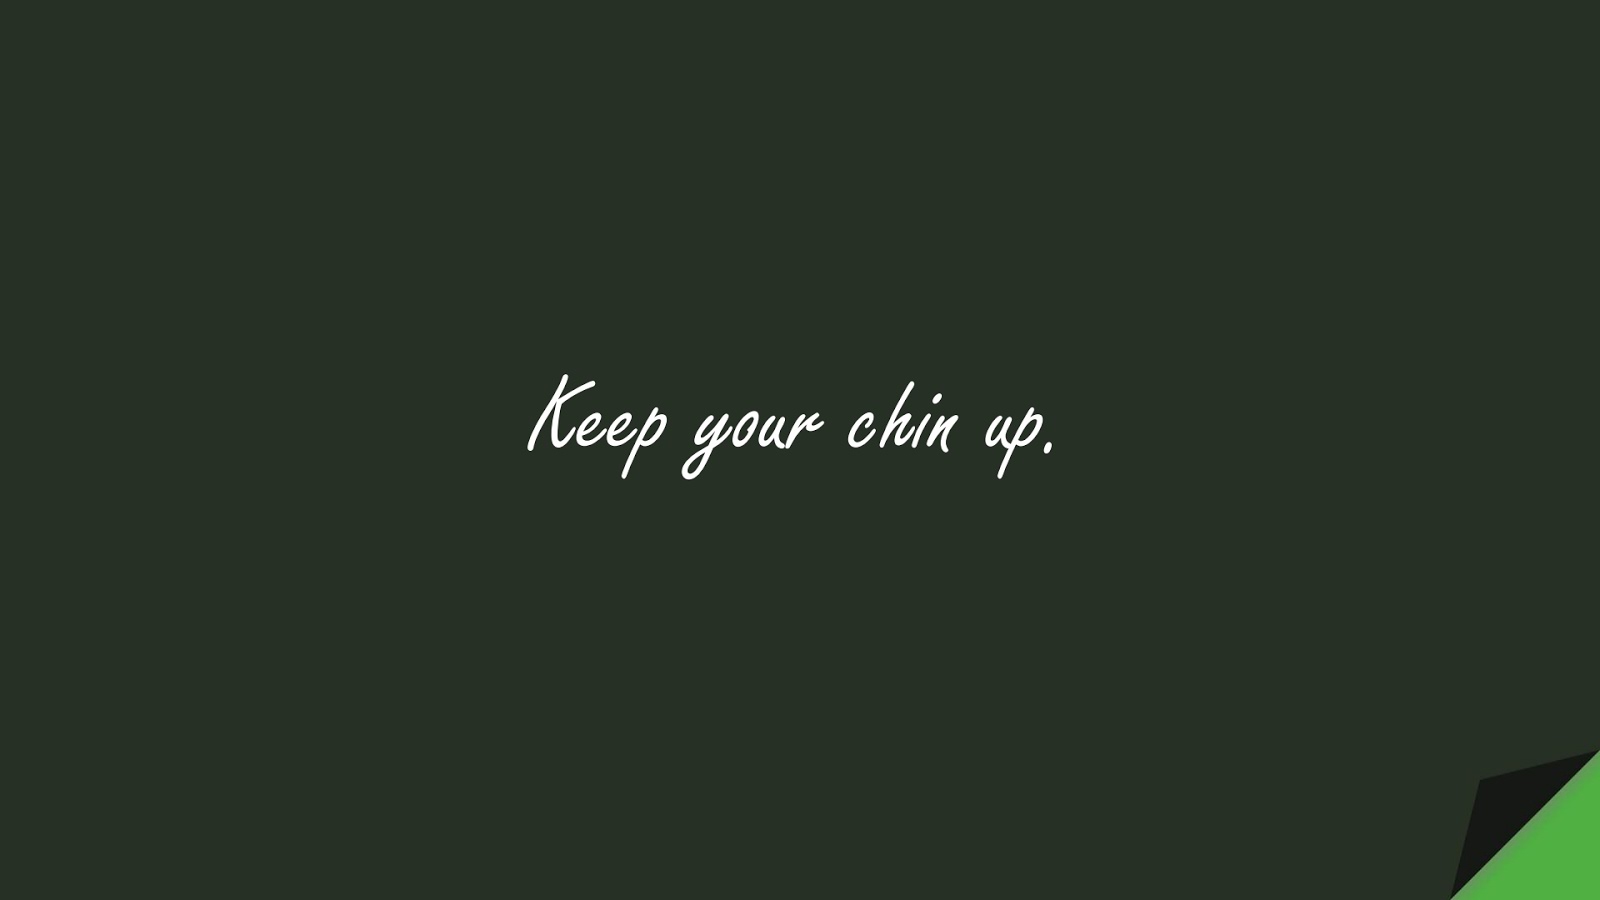 Keep your chin up.FALSE